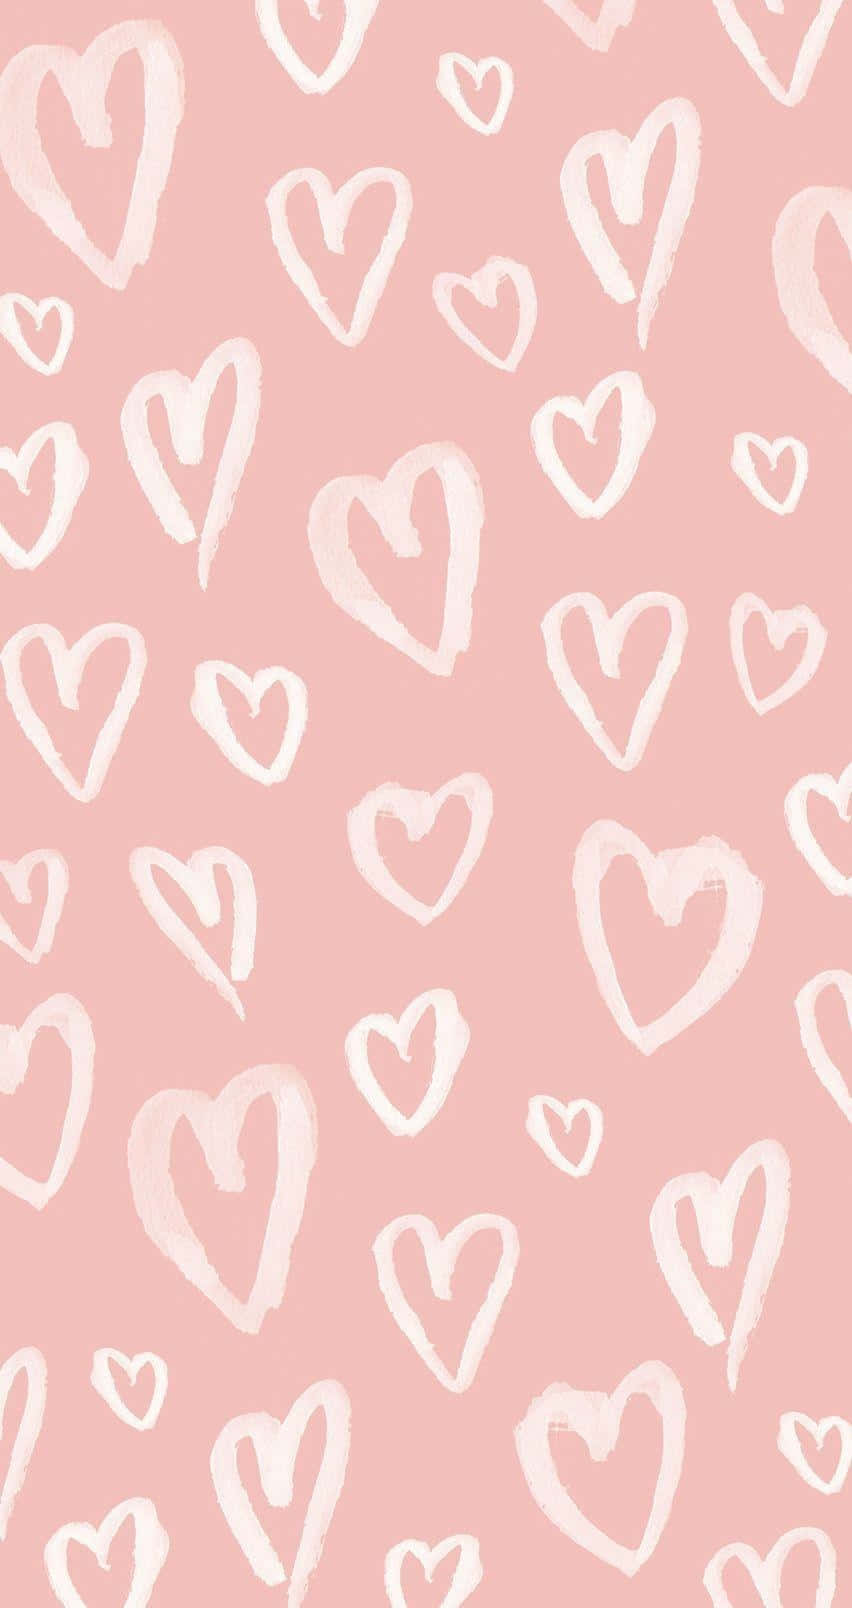 Pink Hearts Pattern Aesthetic Wallpaper.jpg Wallpaper